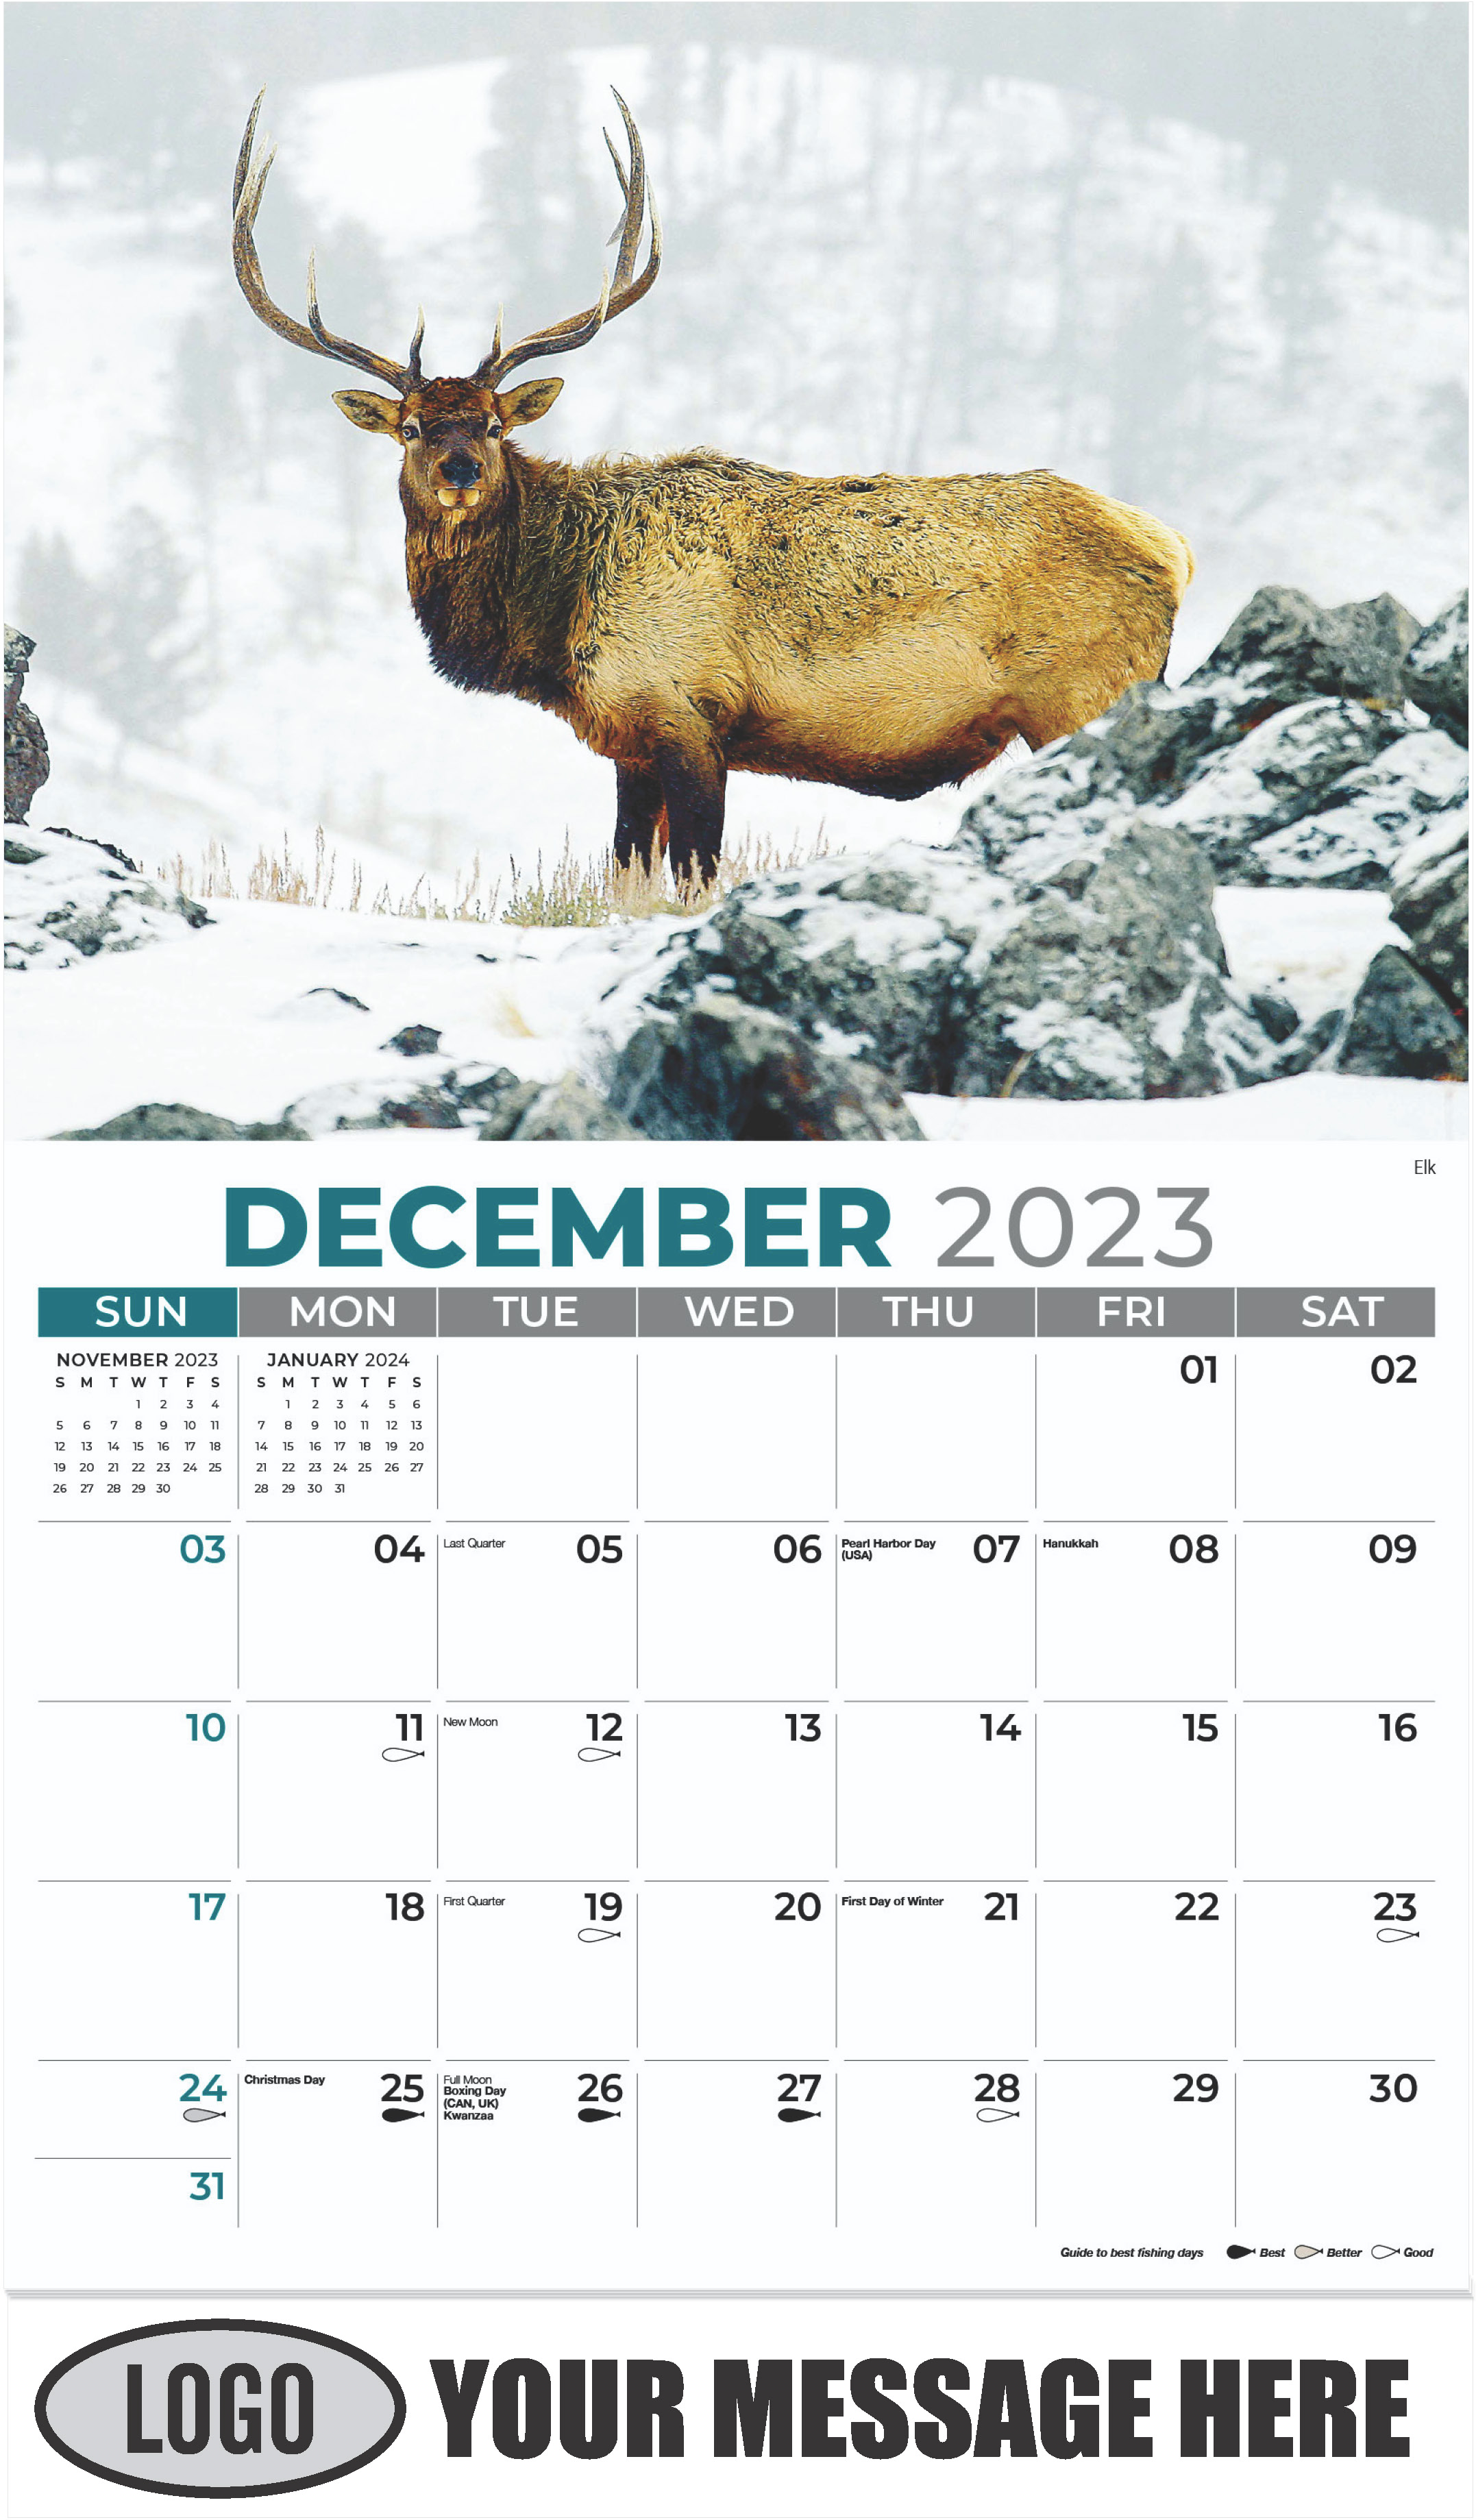 Elk - December 2023 - North American Wildlife 2023 Promotional Calendar